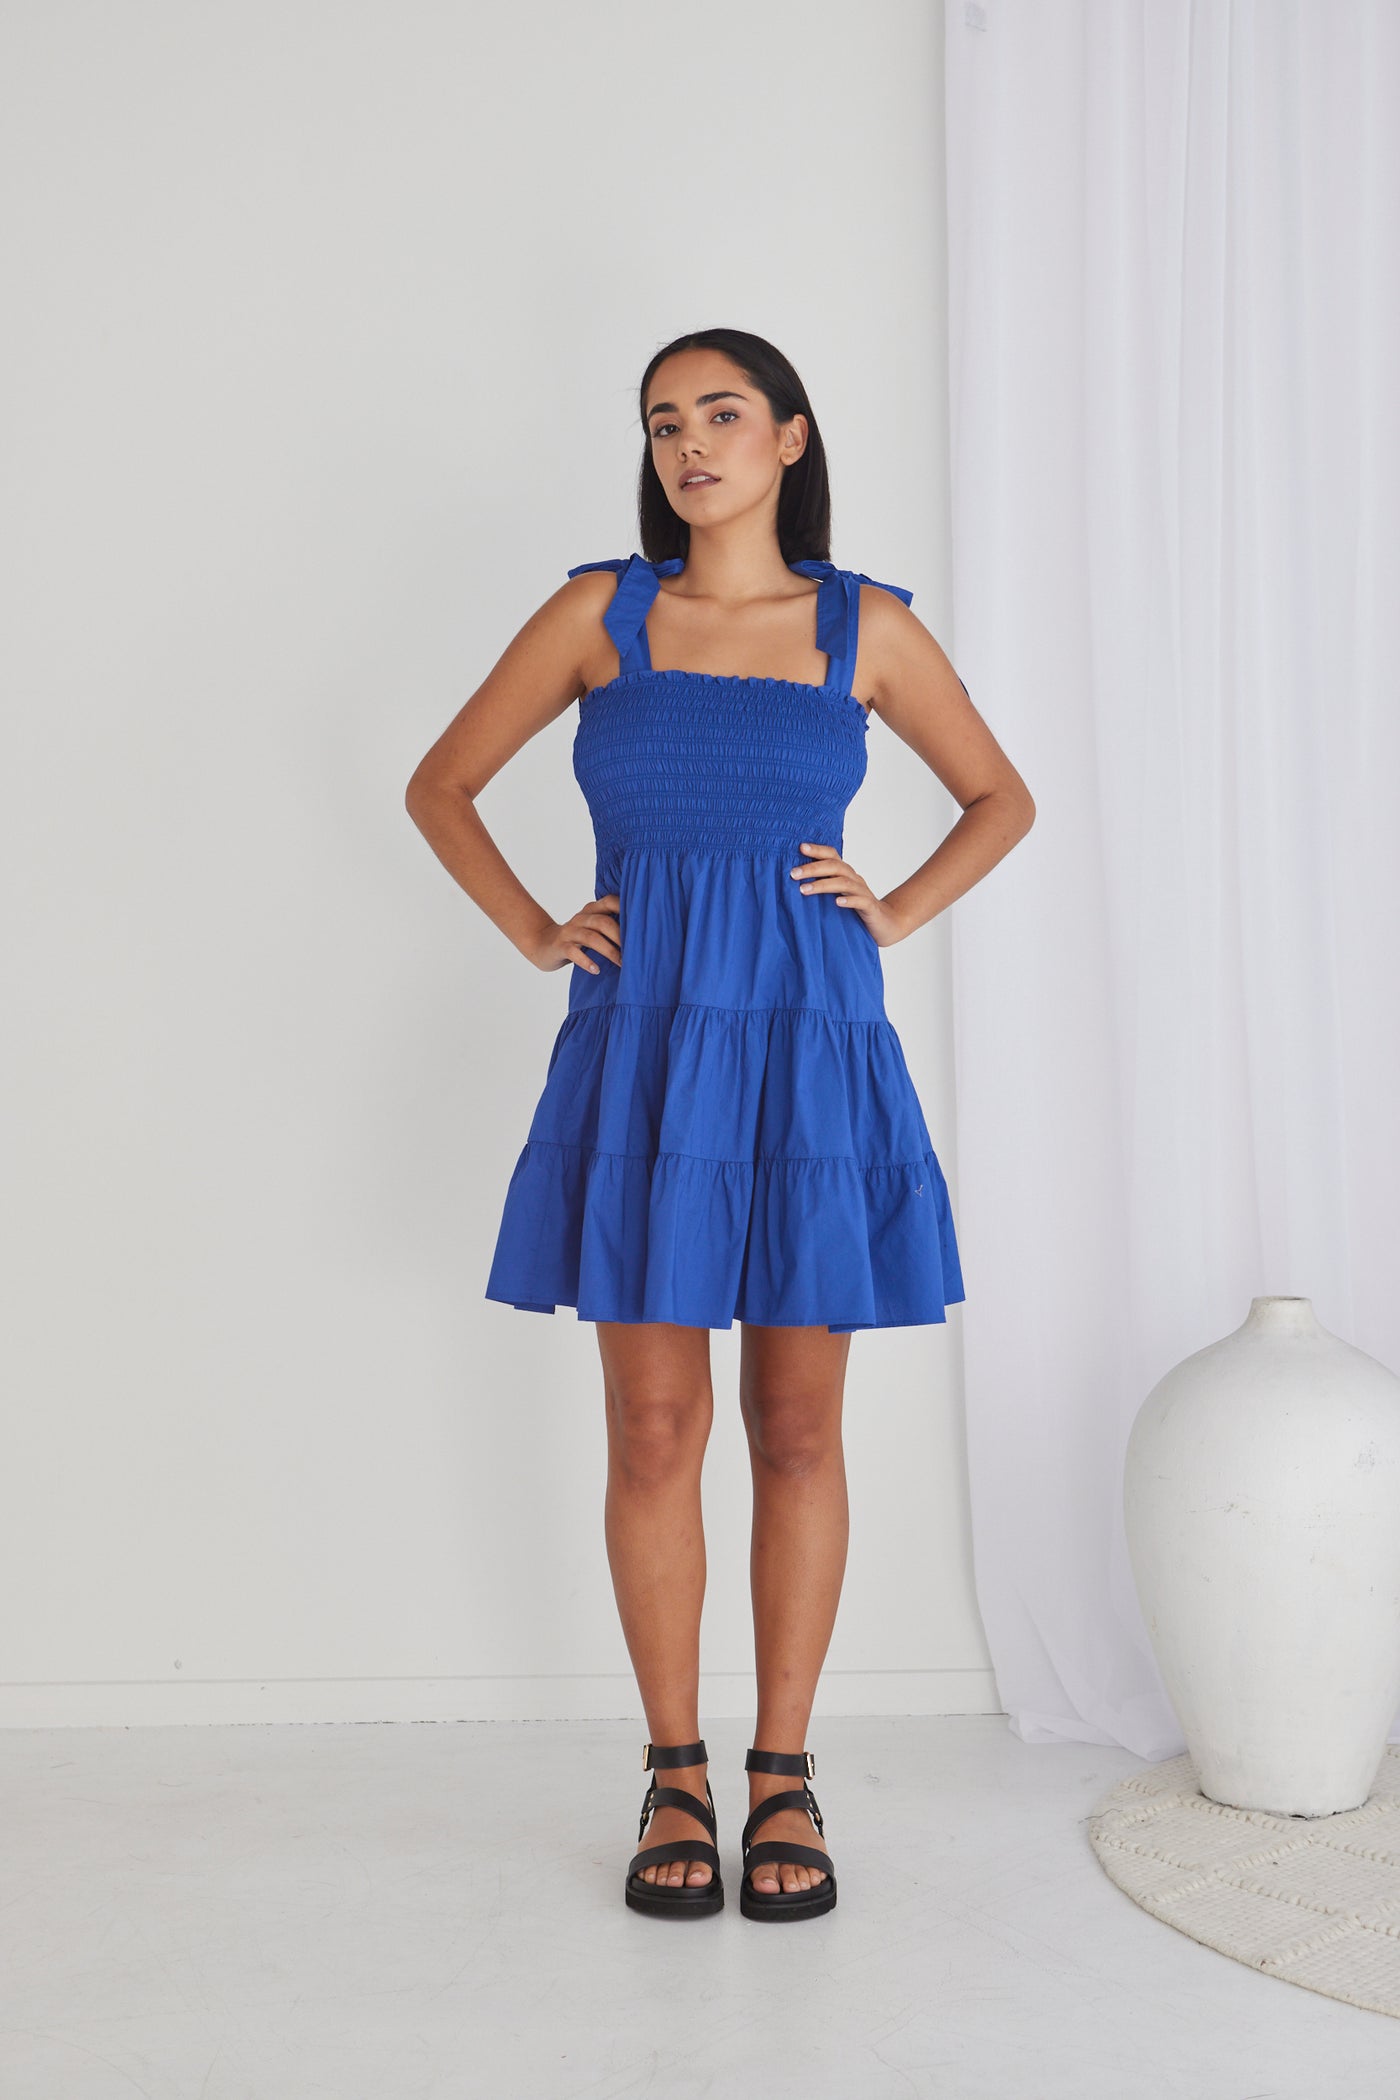 Ivy + Jack Arabella Mini Dress - Electric Blue